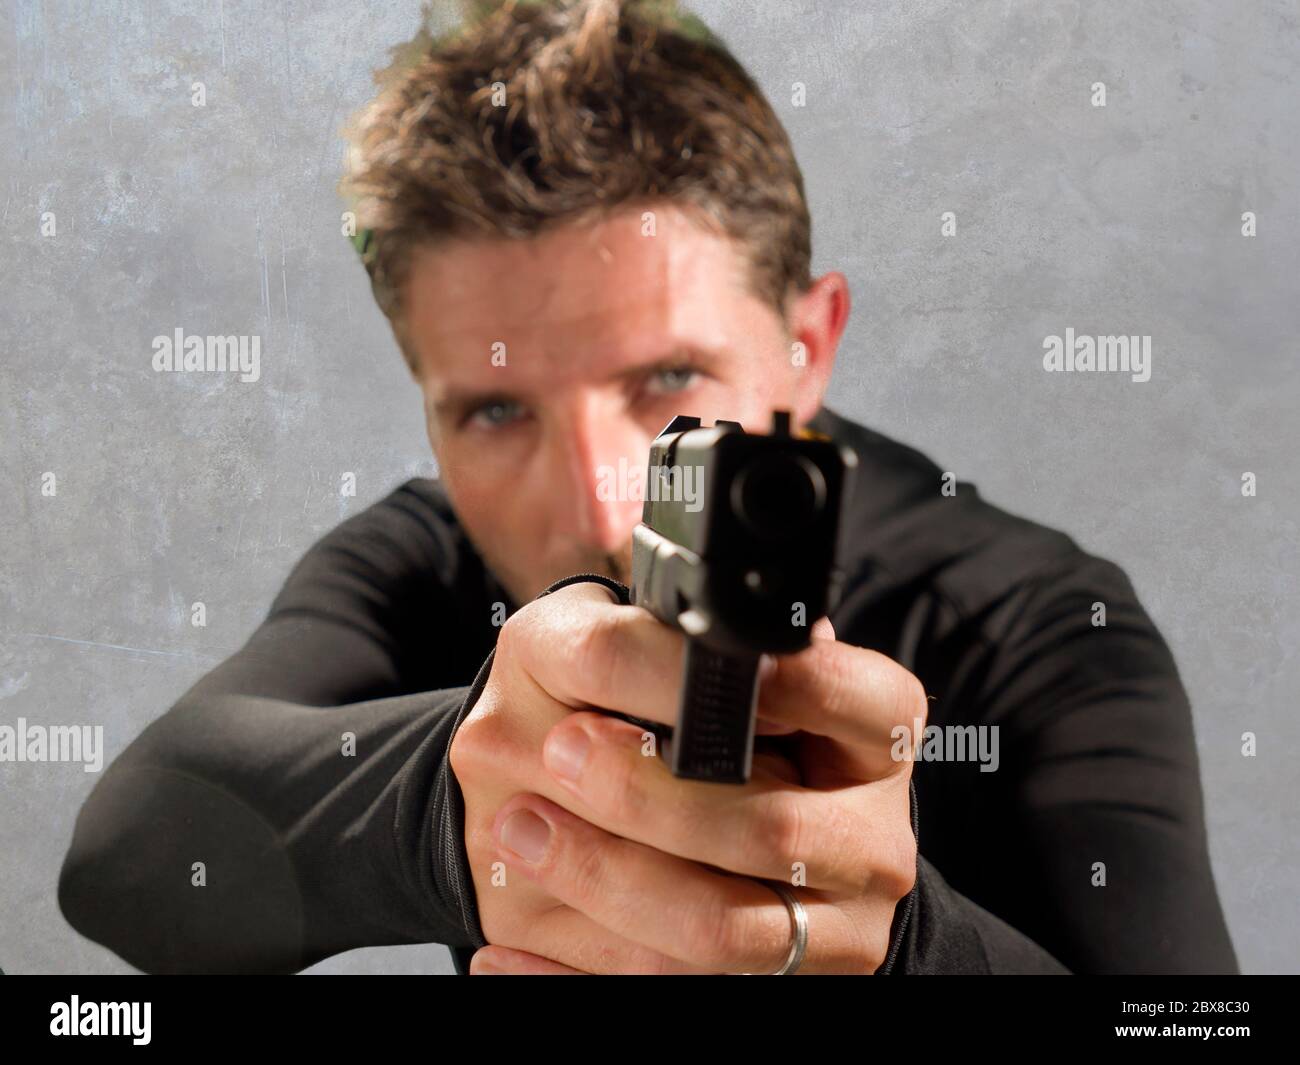 guy pointing gun stock photo